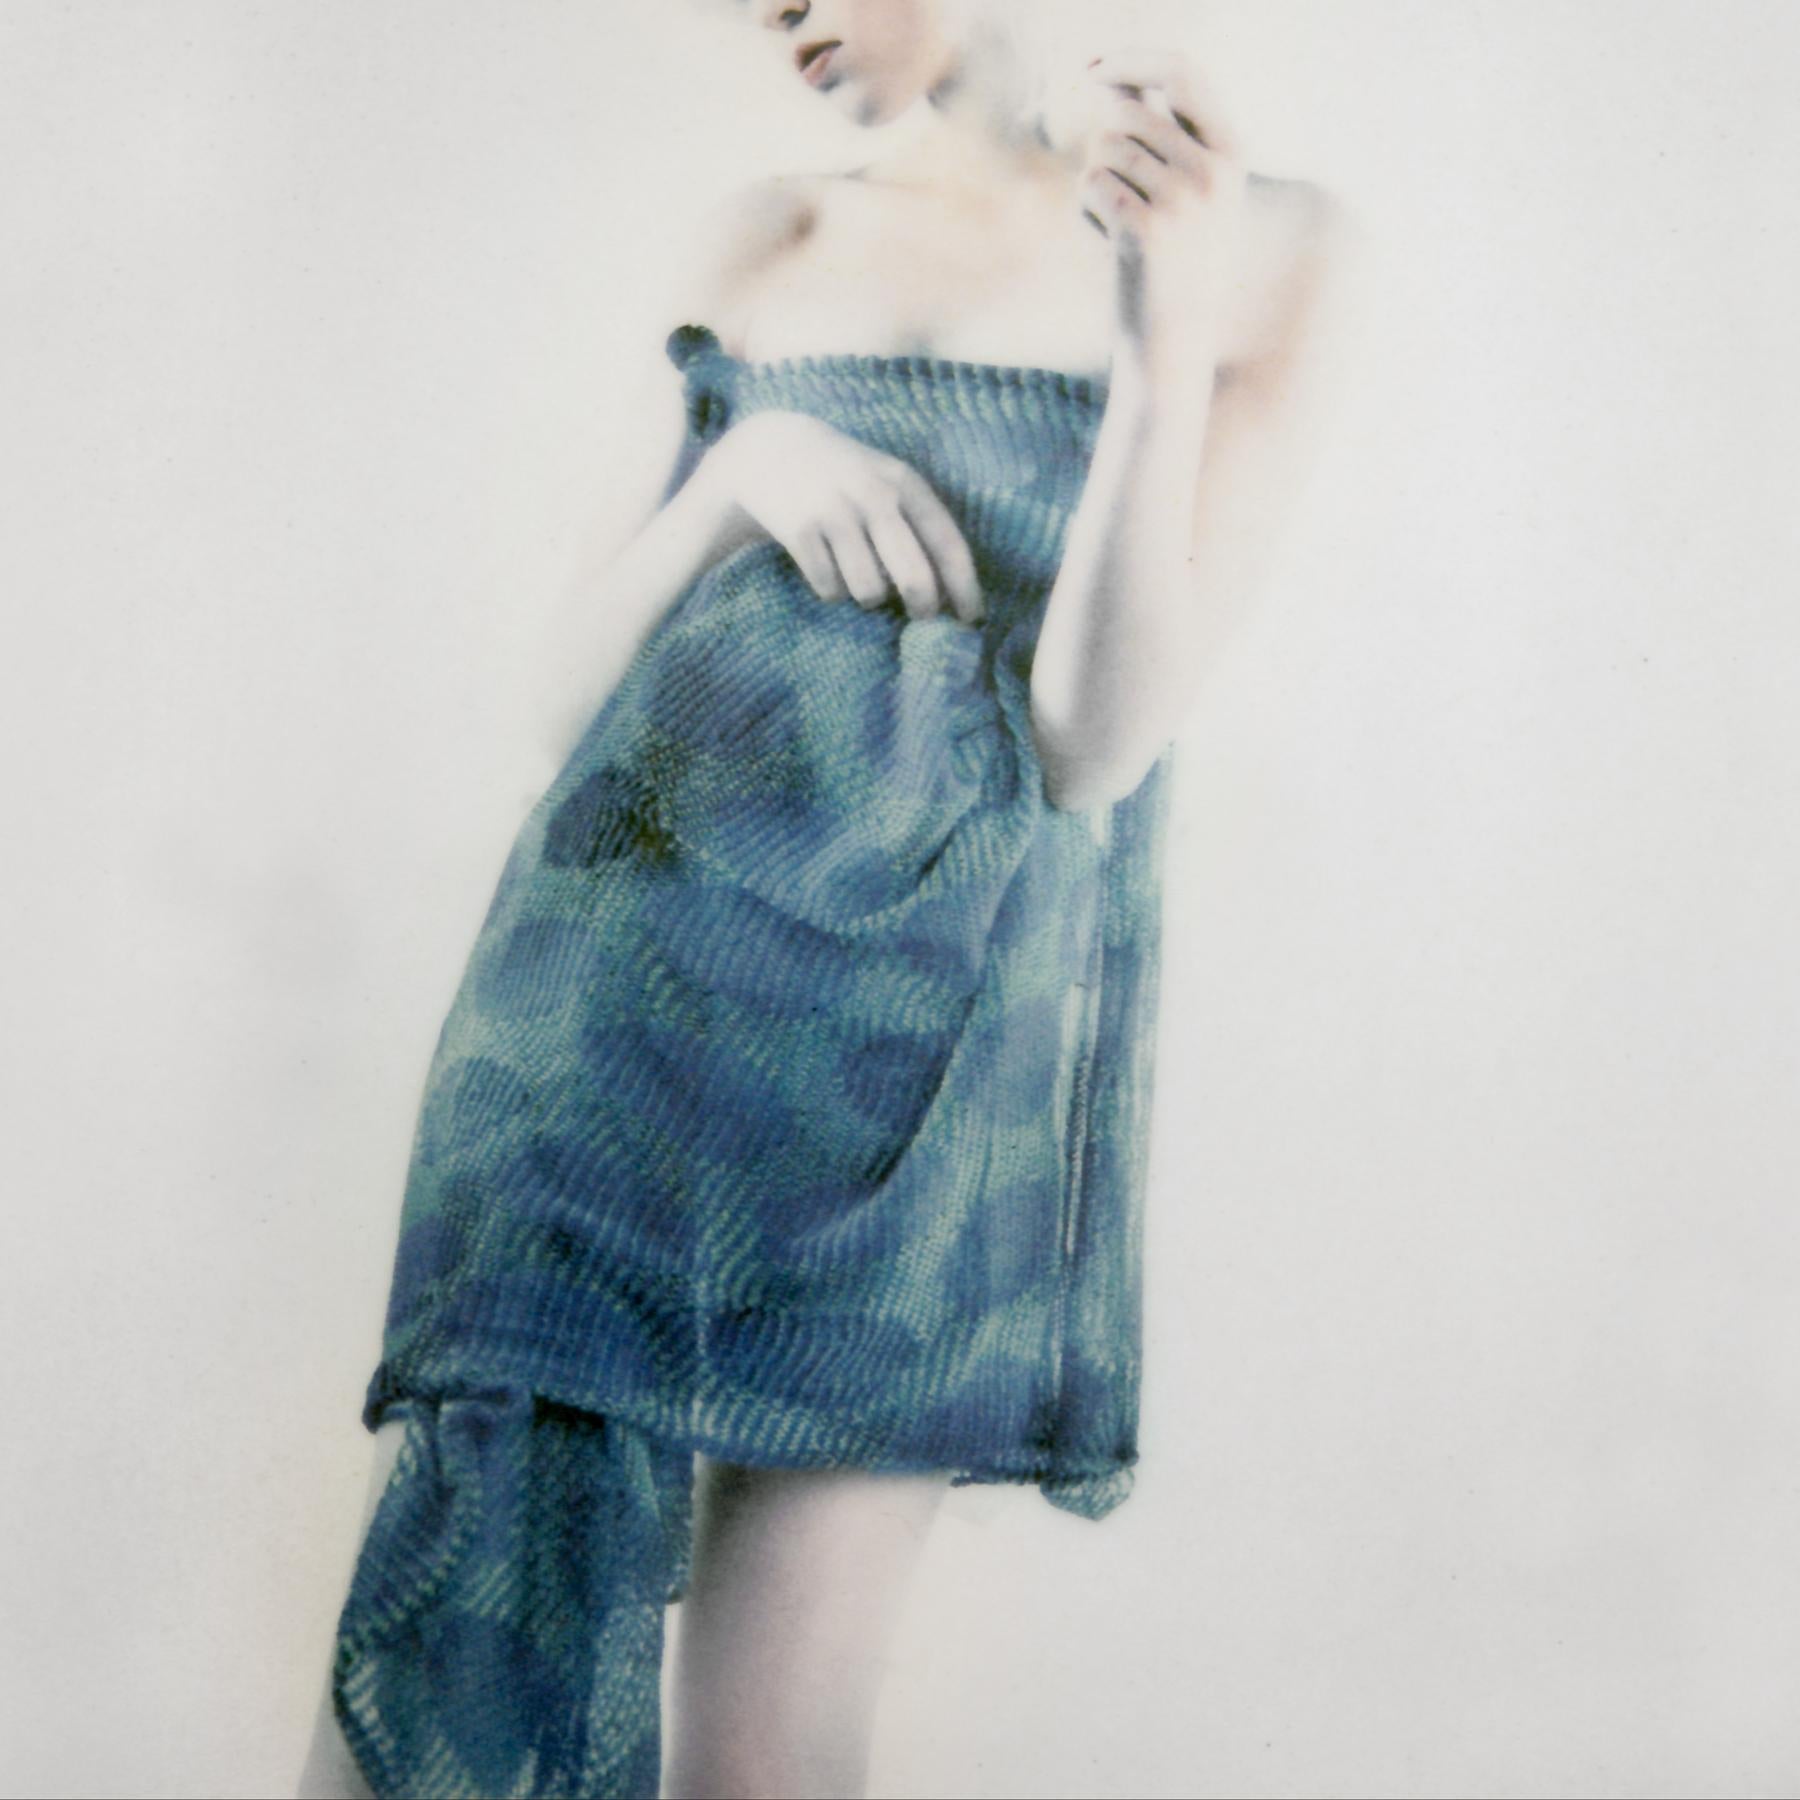 Azul Azul, figurative and feminine photography, Mira Loew, Bright Bodies series